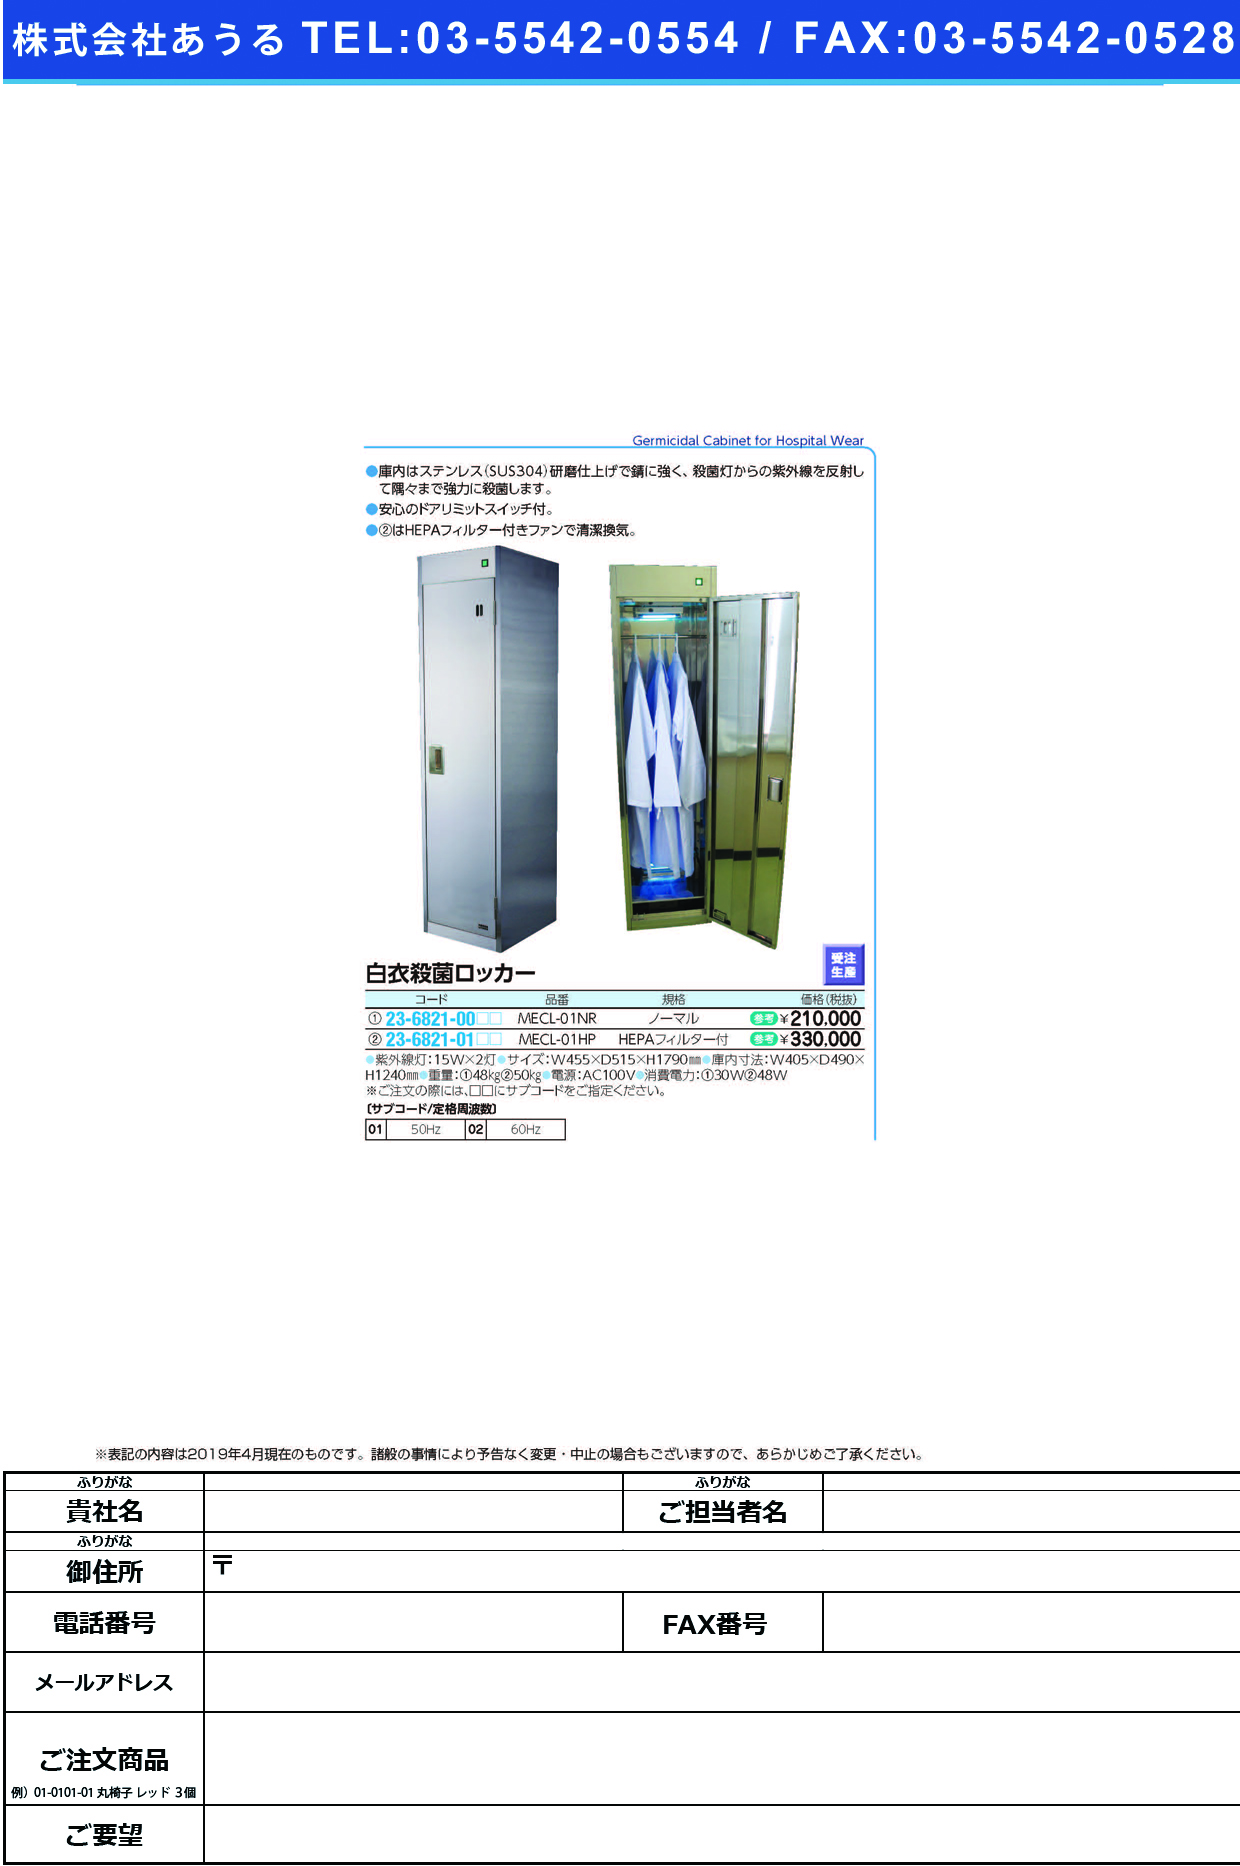 (23-6821-00)白衣殺菌ロッカー MECL-01NR(ﾉｰﾏﾙ) ﾊｸｲｻｯｷﾝﾛｯｶｰ ５０Ｈｚ【1台単位】【2019年カタログ商品】